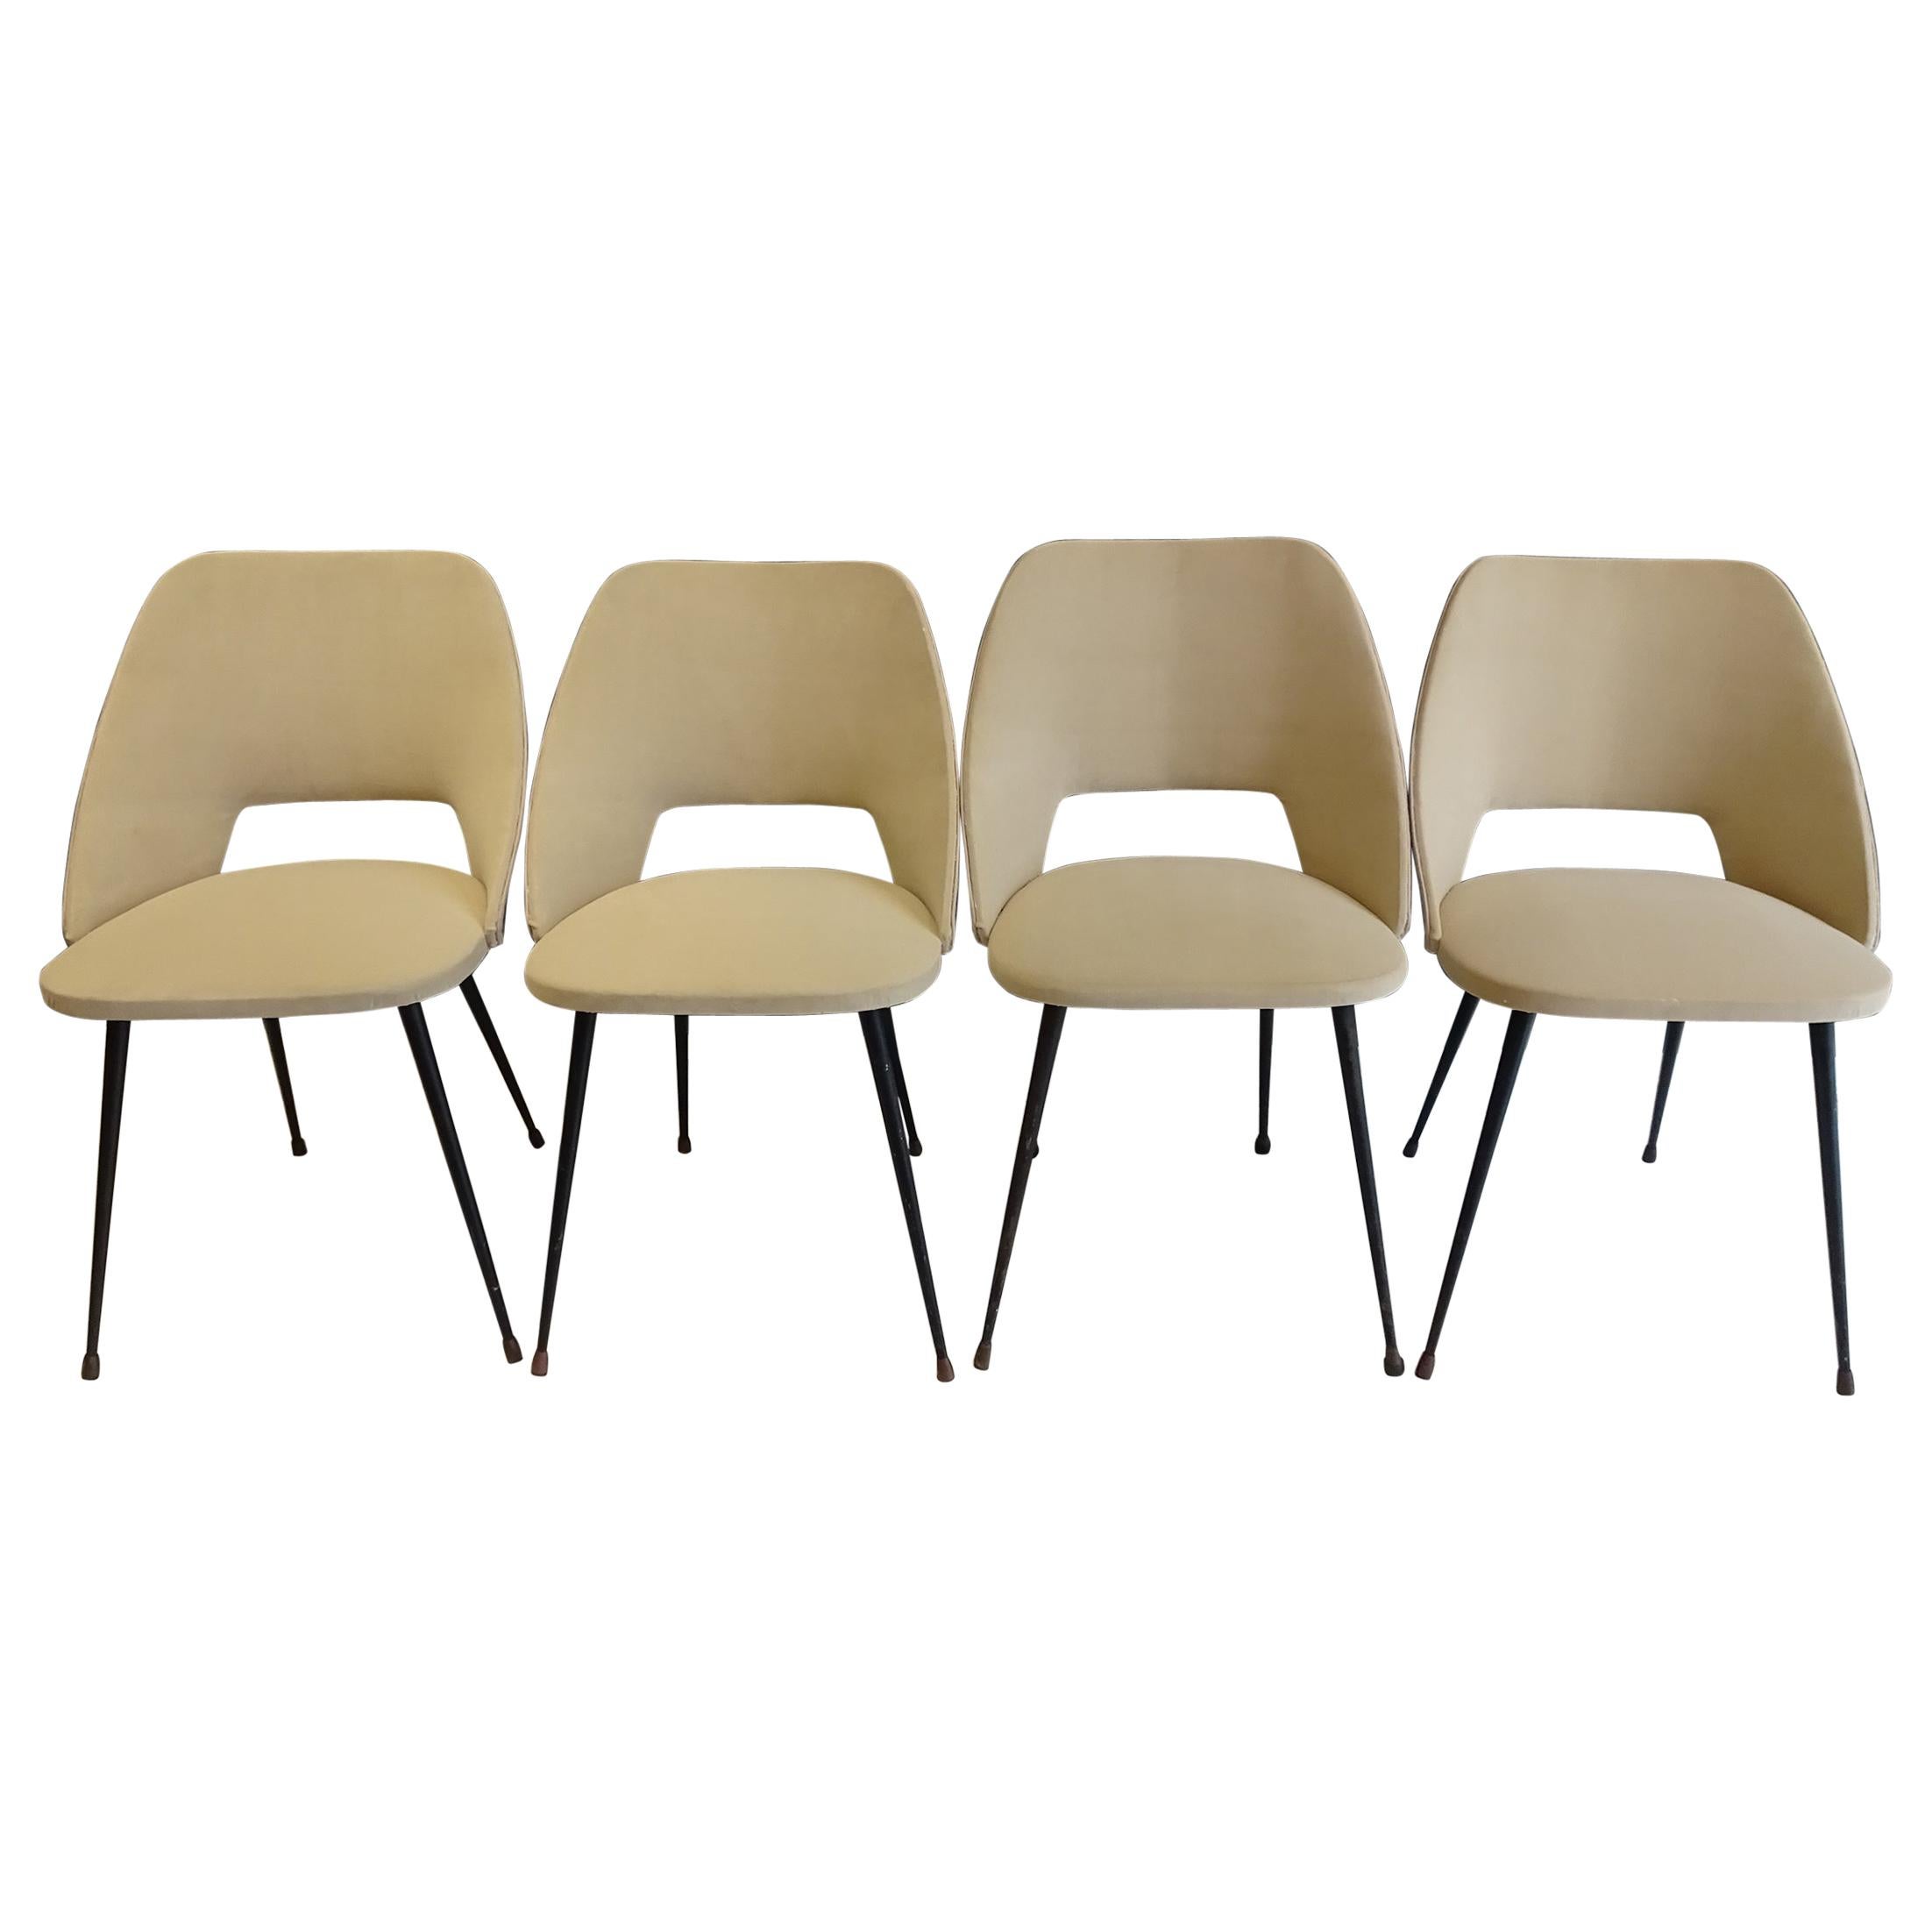 Pierre Guariche Serie of 4 Chairs Model "Tonneau" For Sale